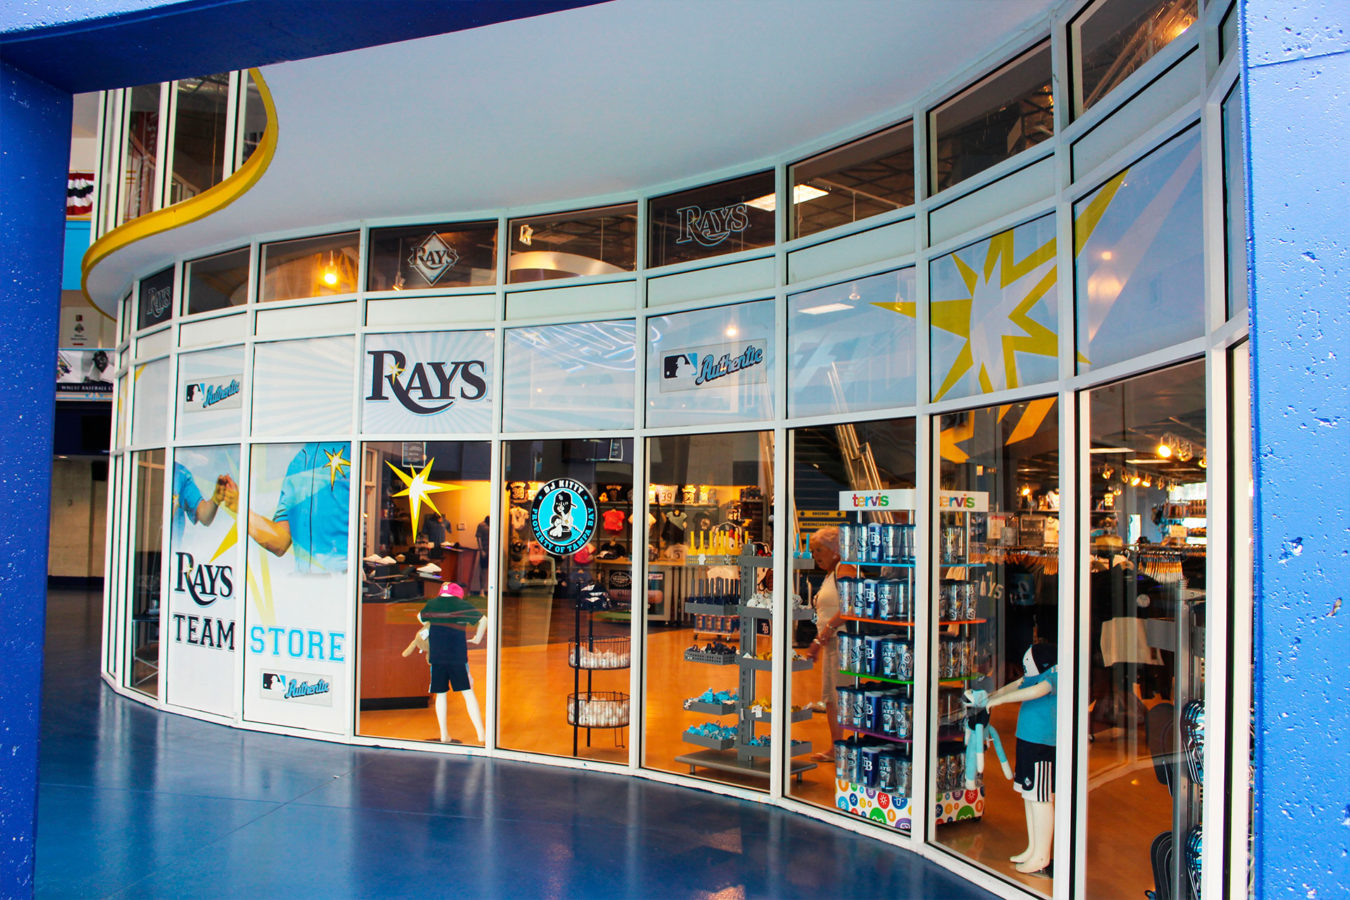 Tampa Bay Rays Team Store - Retail Displays